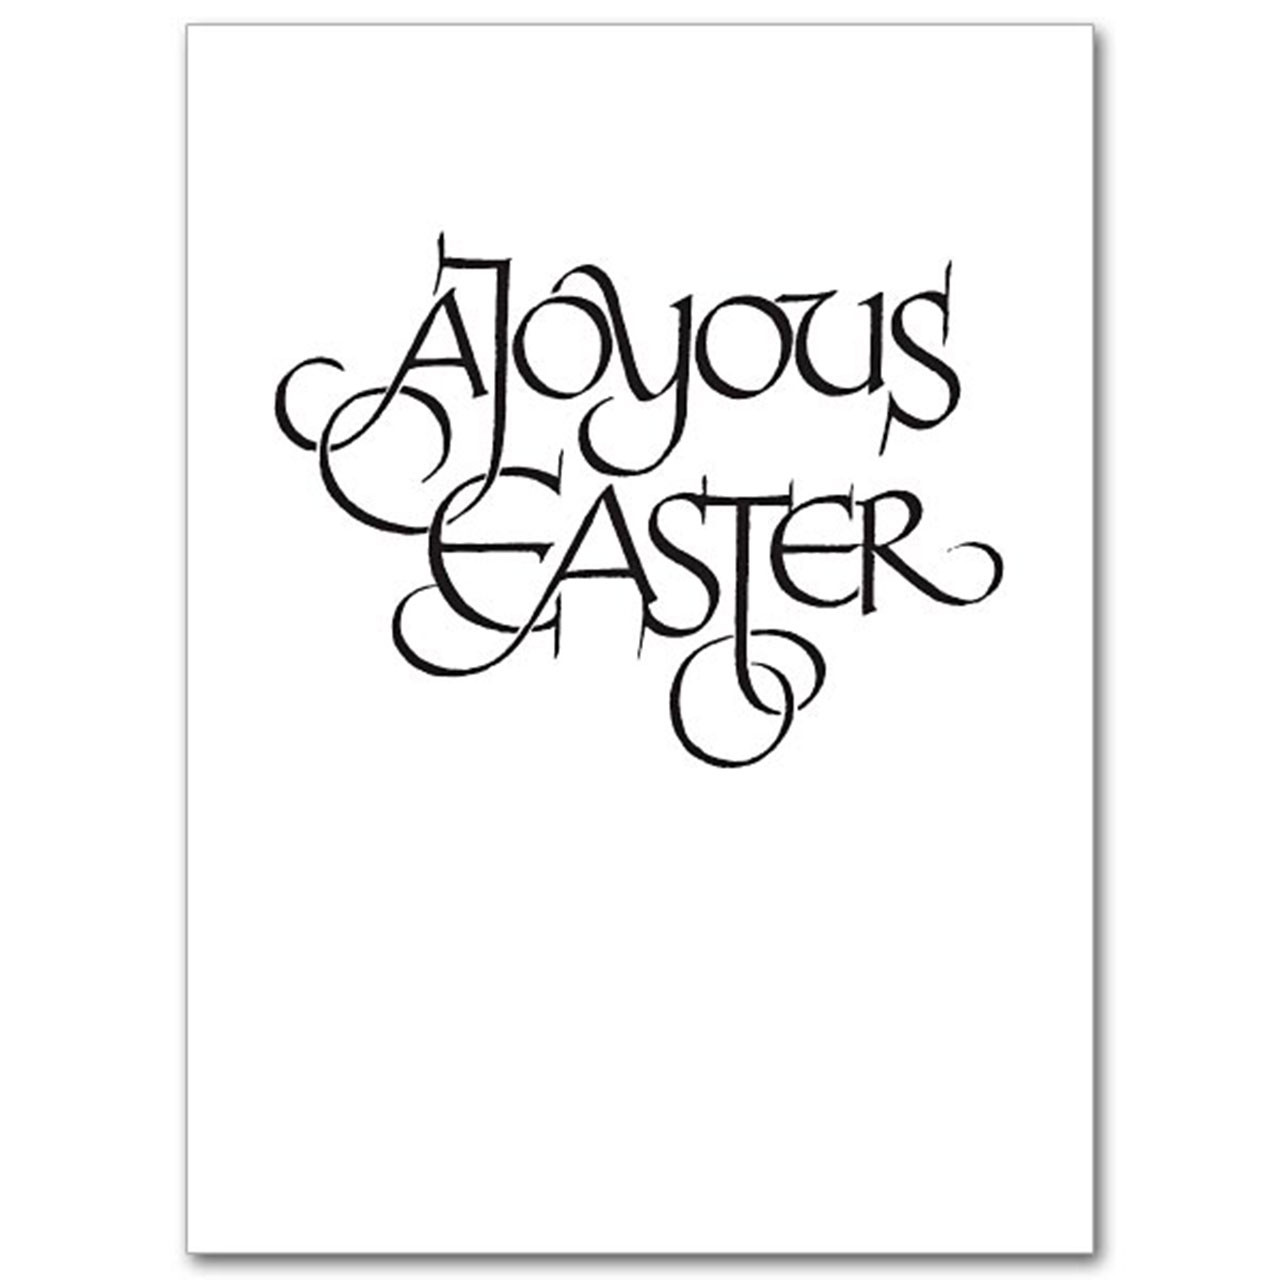 Inside the Alleluia Easter Card